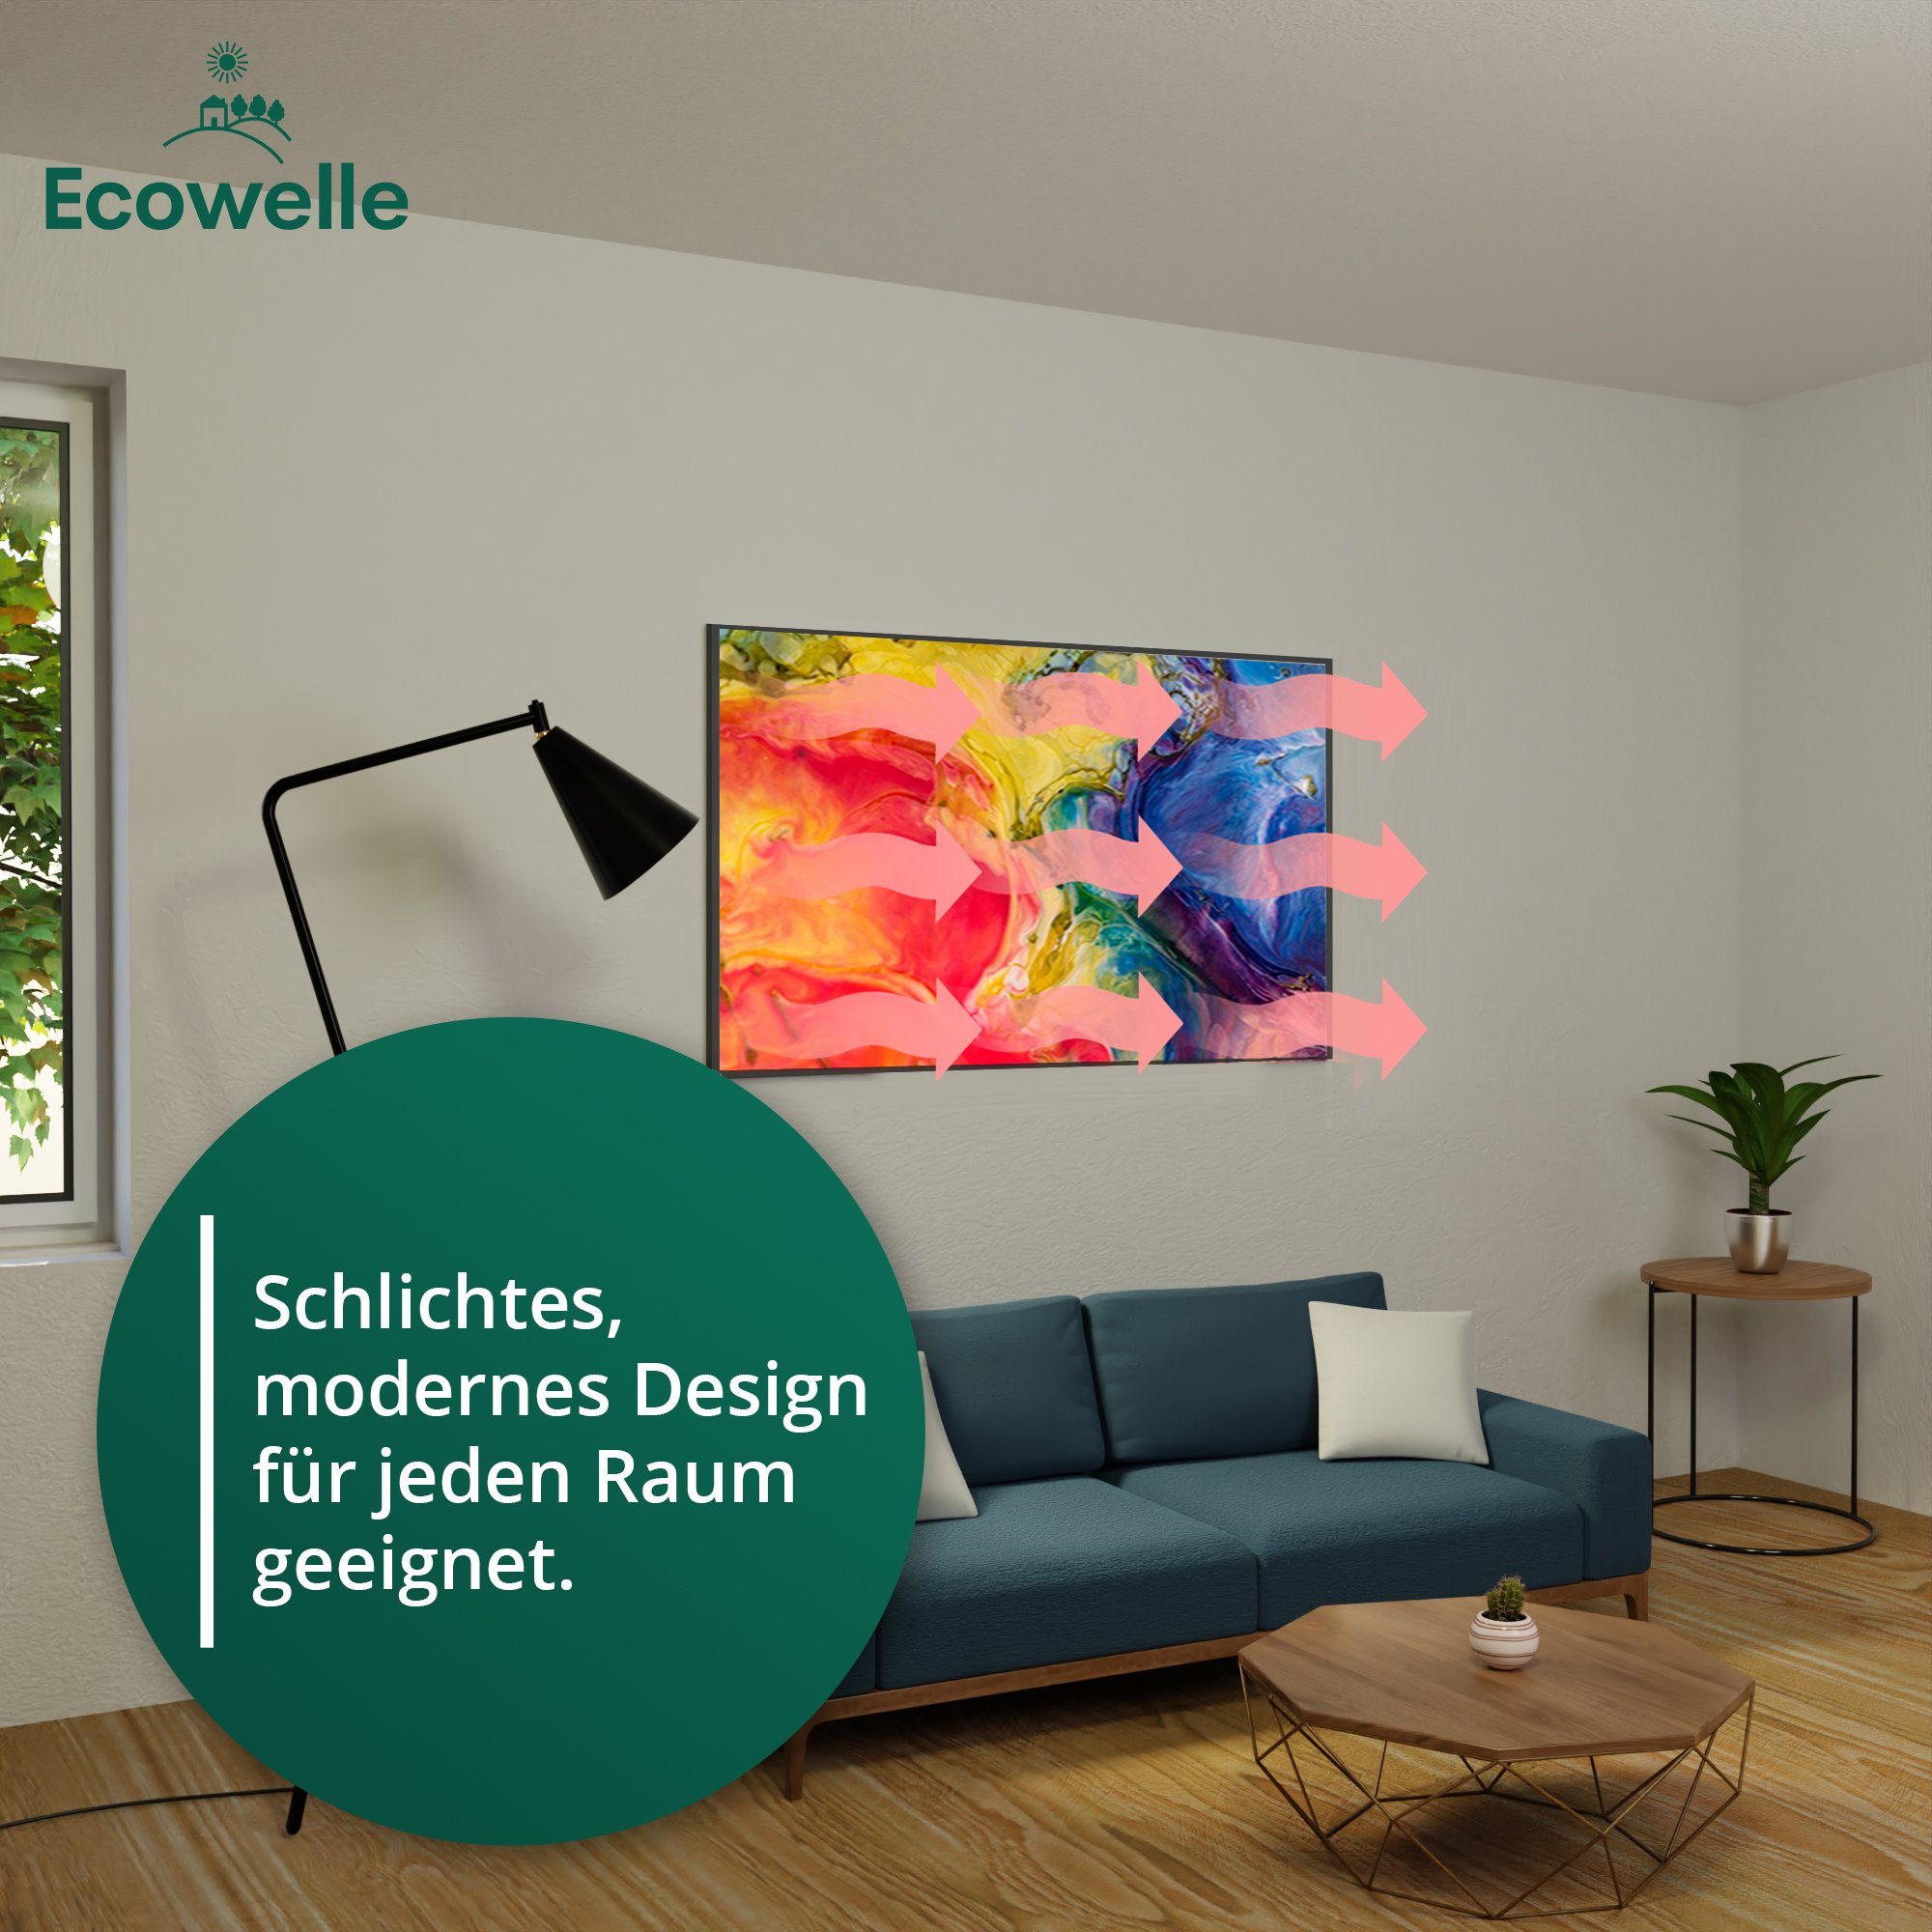 Ecowelle Infrarotheizung + Geprüft, Thermostat, App 350-1200 Wifi Elektroheizung Watt in Aluminium Rahmen Made TÜV Germany,